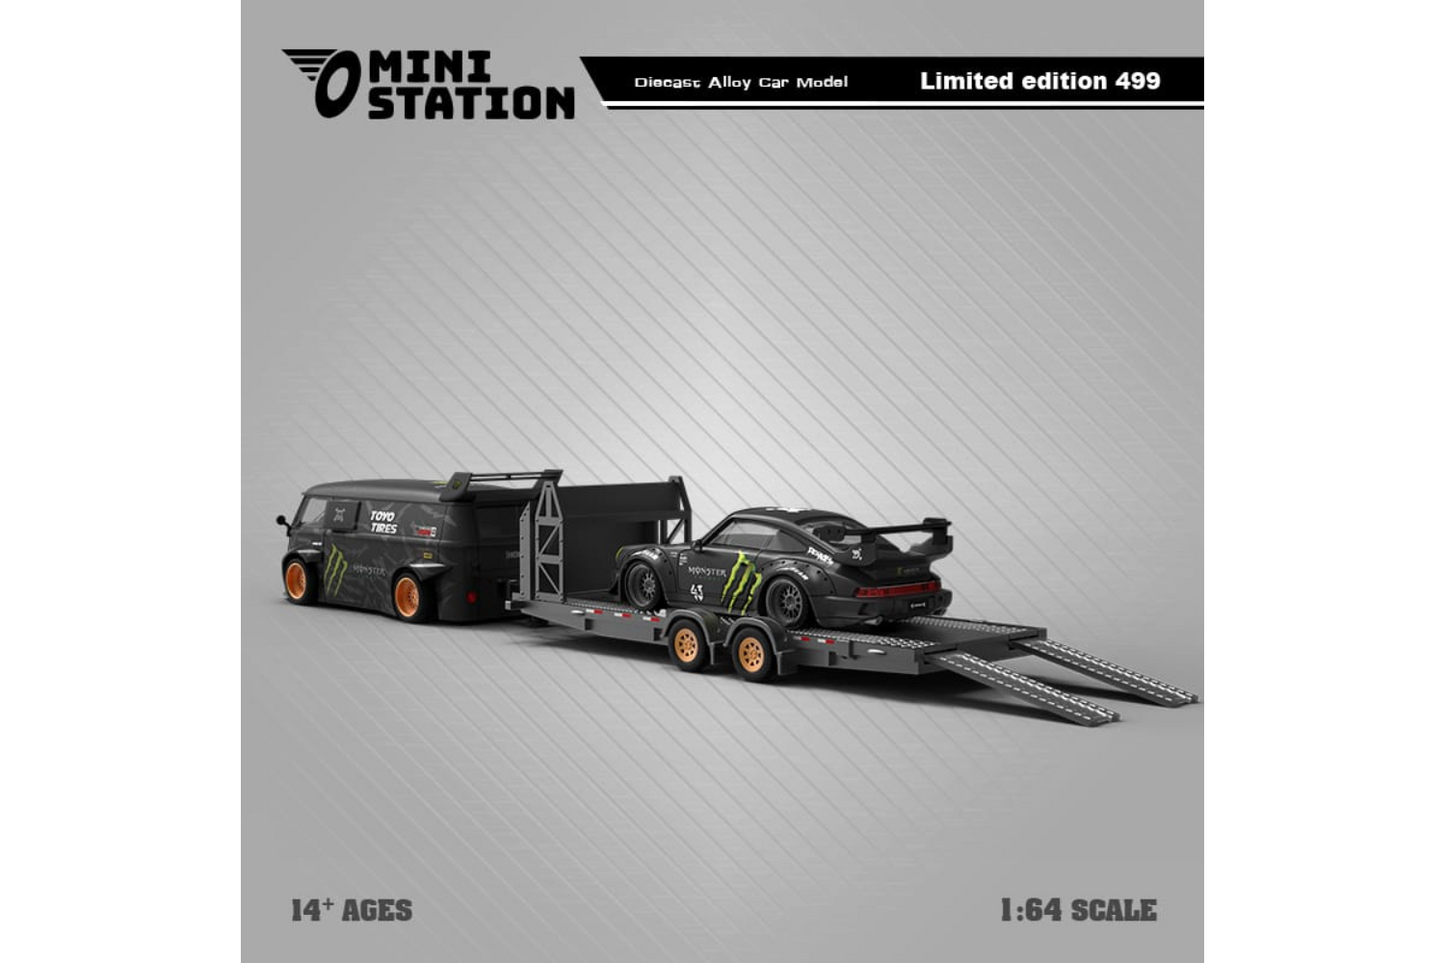 Mini Station 1/64 RWB VW T1 Van and Porsche 911 RWB964 Trailer Set in Monster Livery